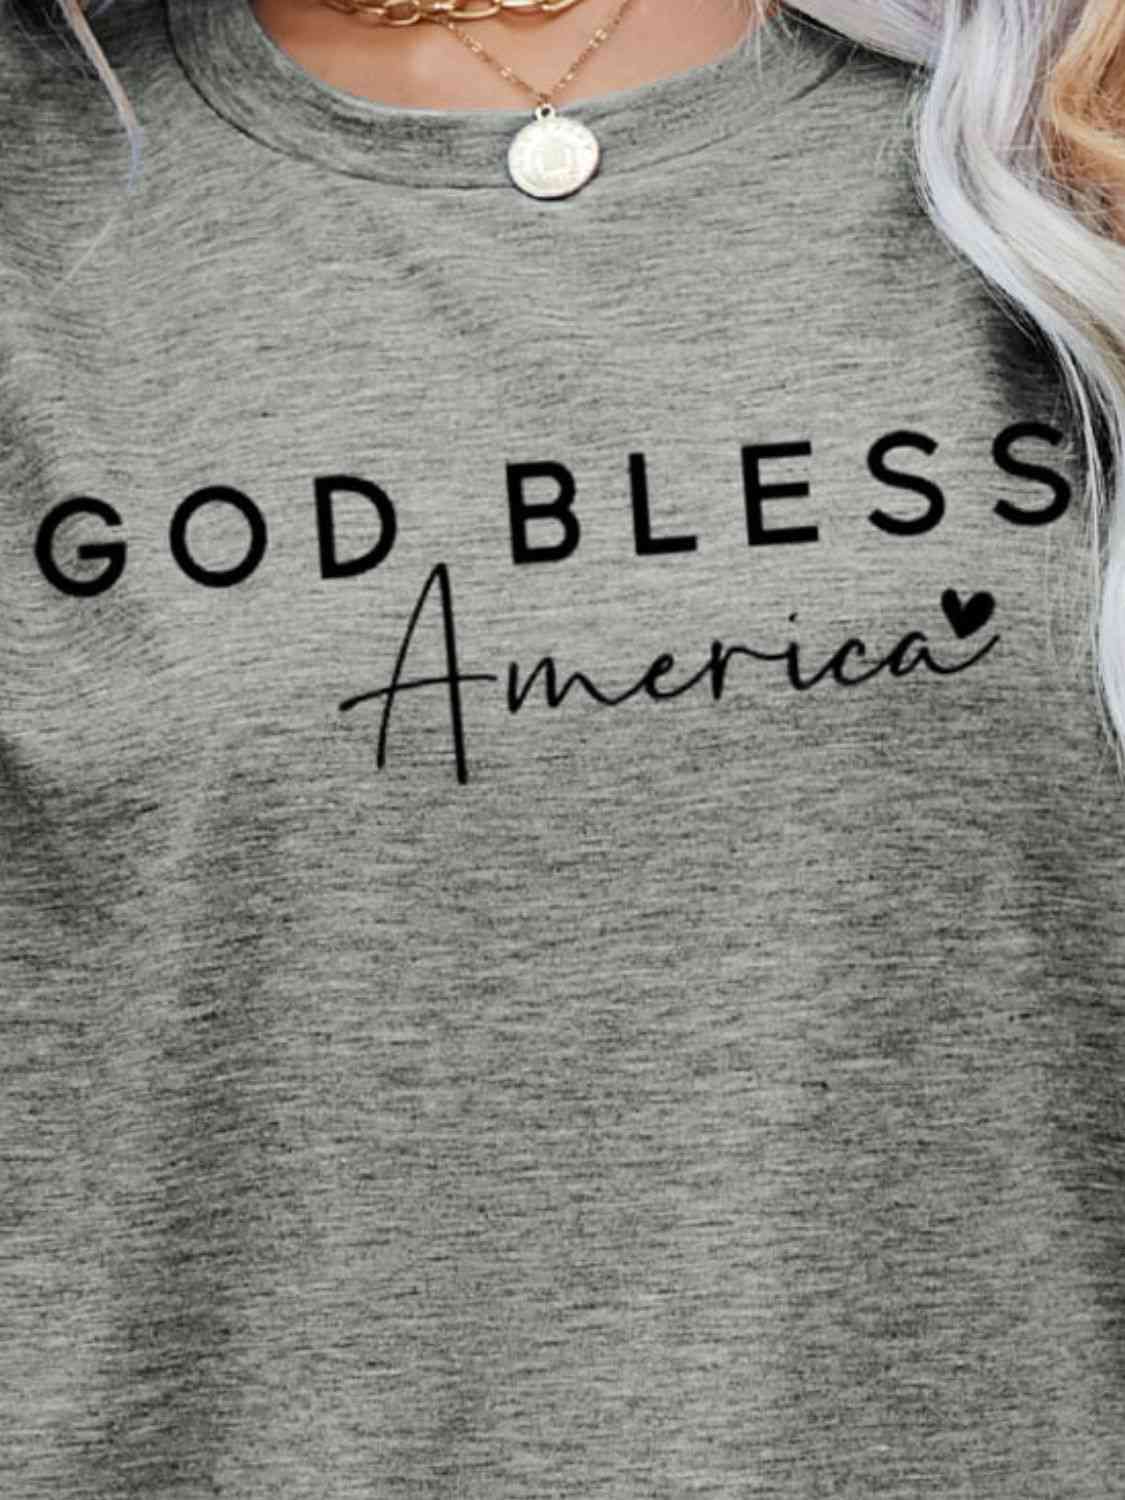 GOD BLESS AMERICA Graphic Short Sleeve Tee - TRENDMELO